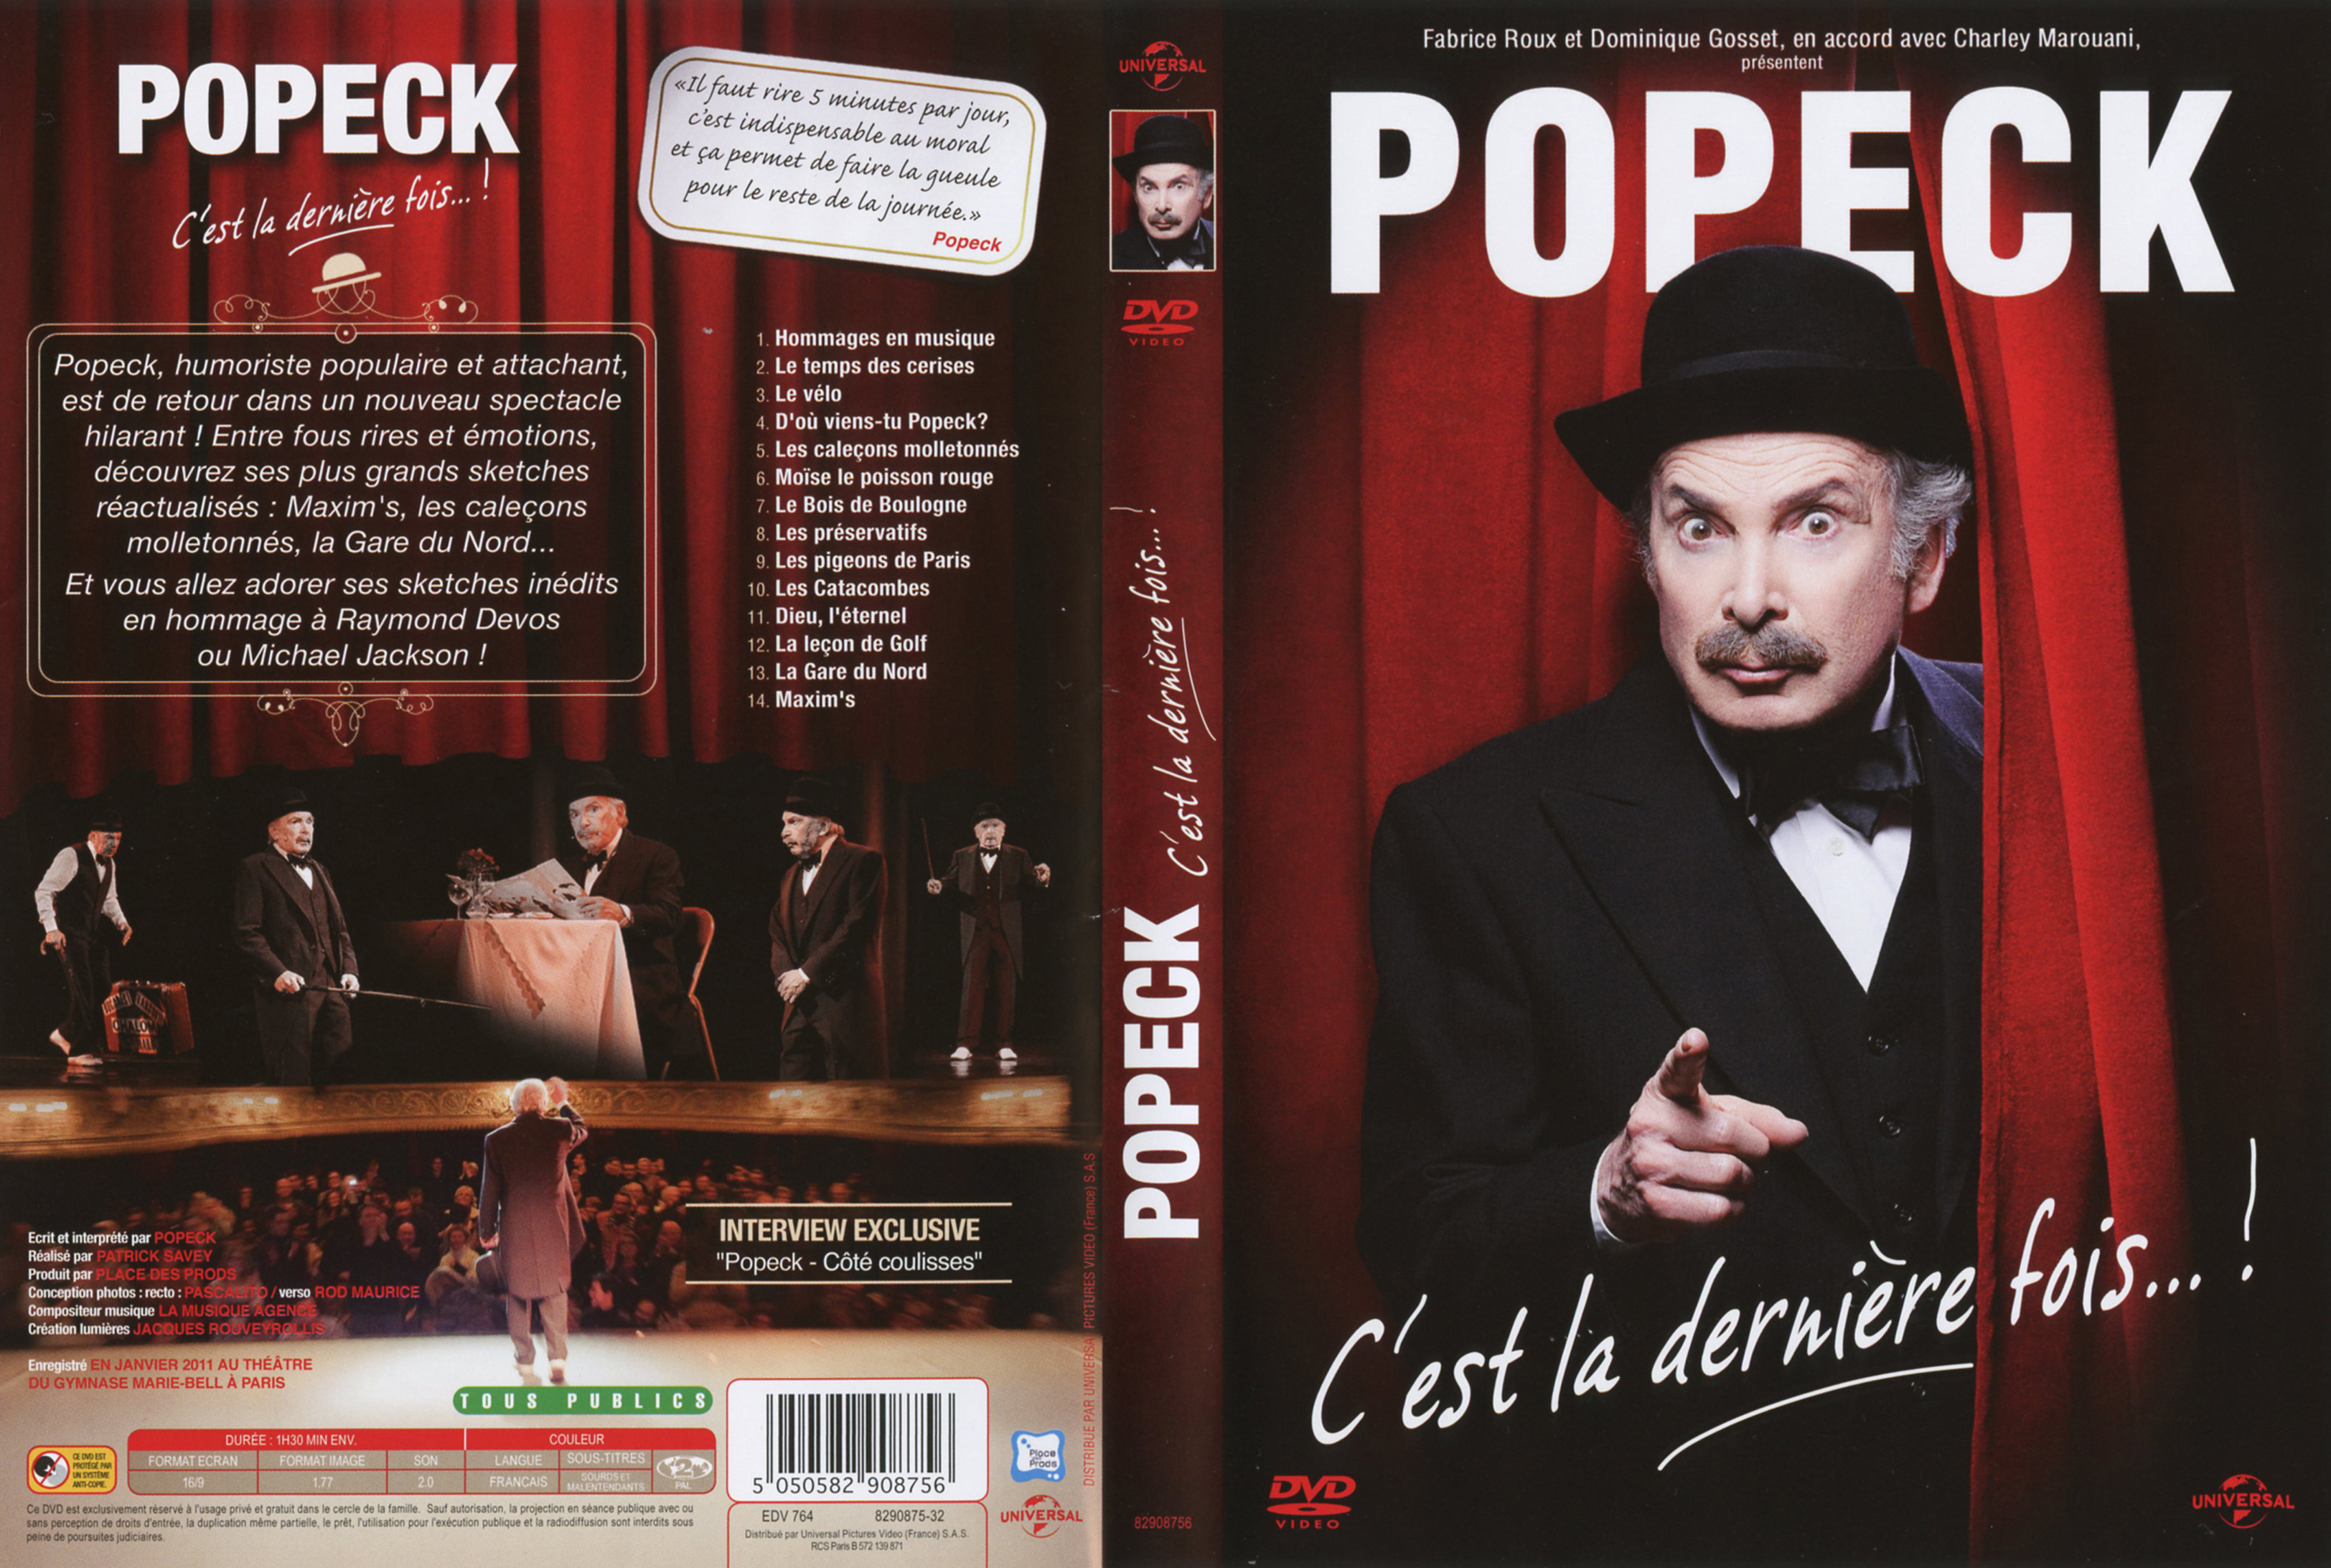 Jaquette DVD Popeck c